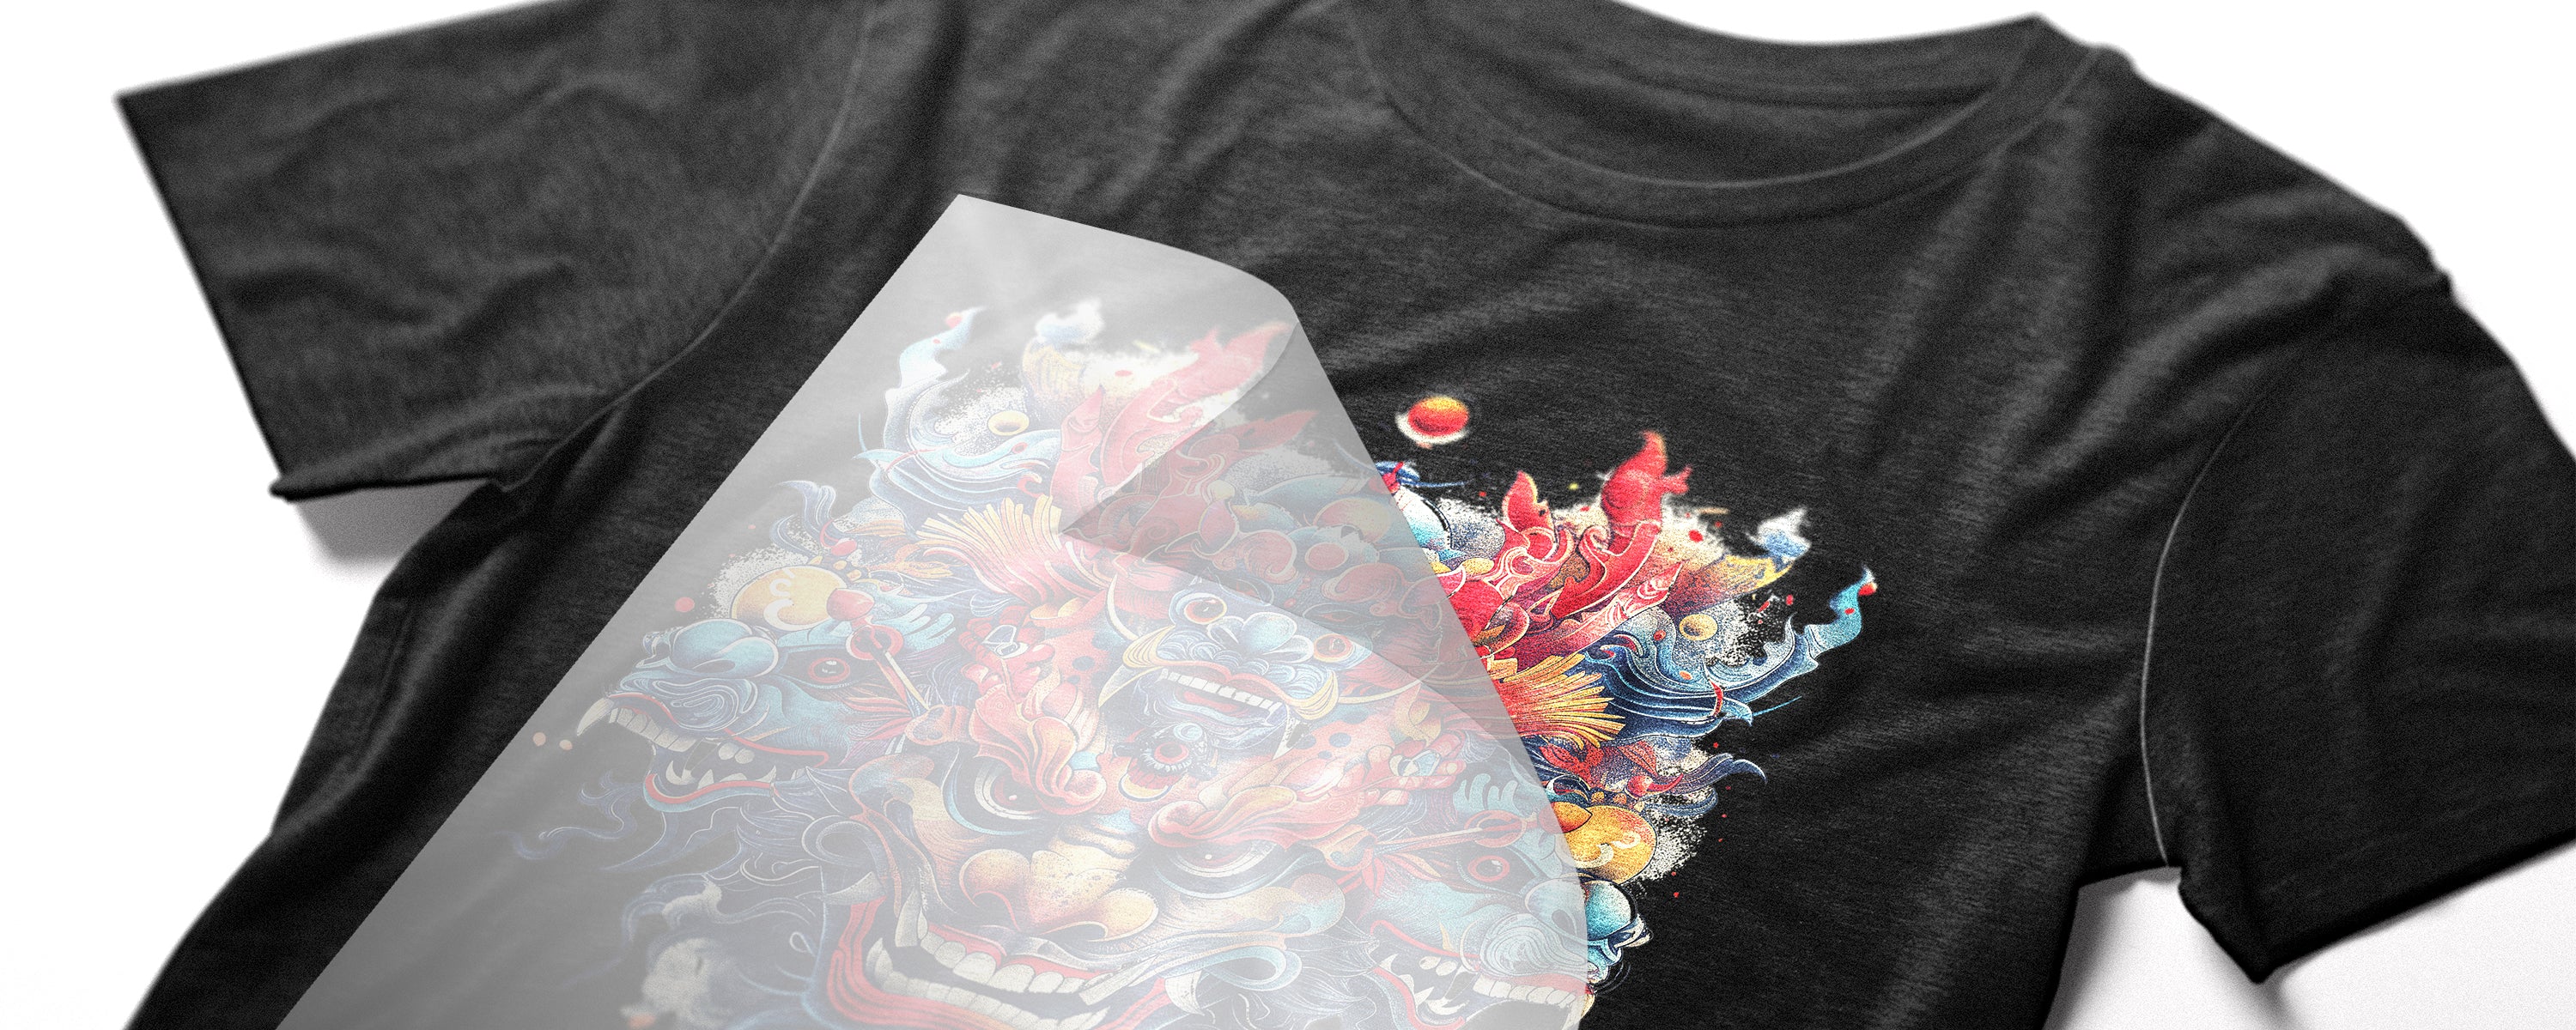 dtf transfer peel pressed on custom tshirt detailed dragon design artwork